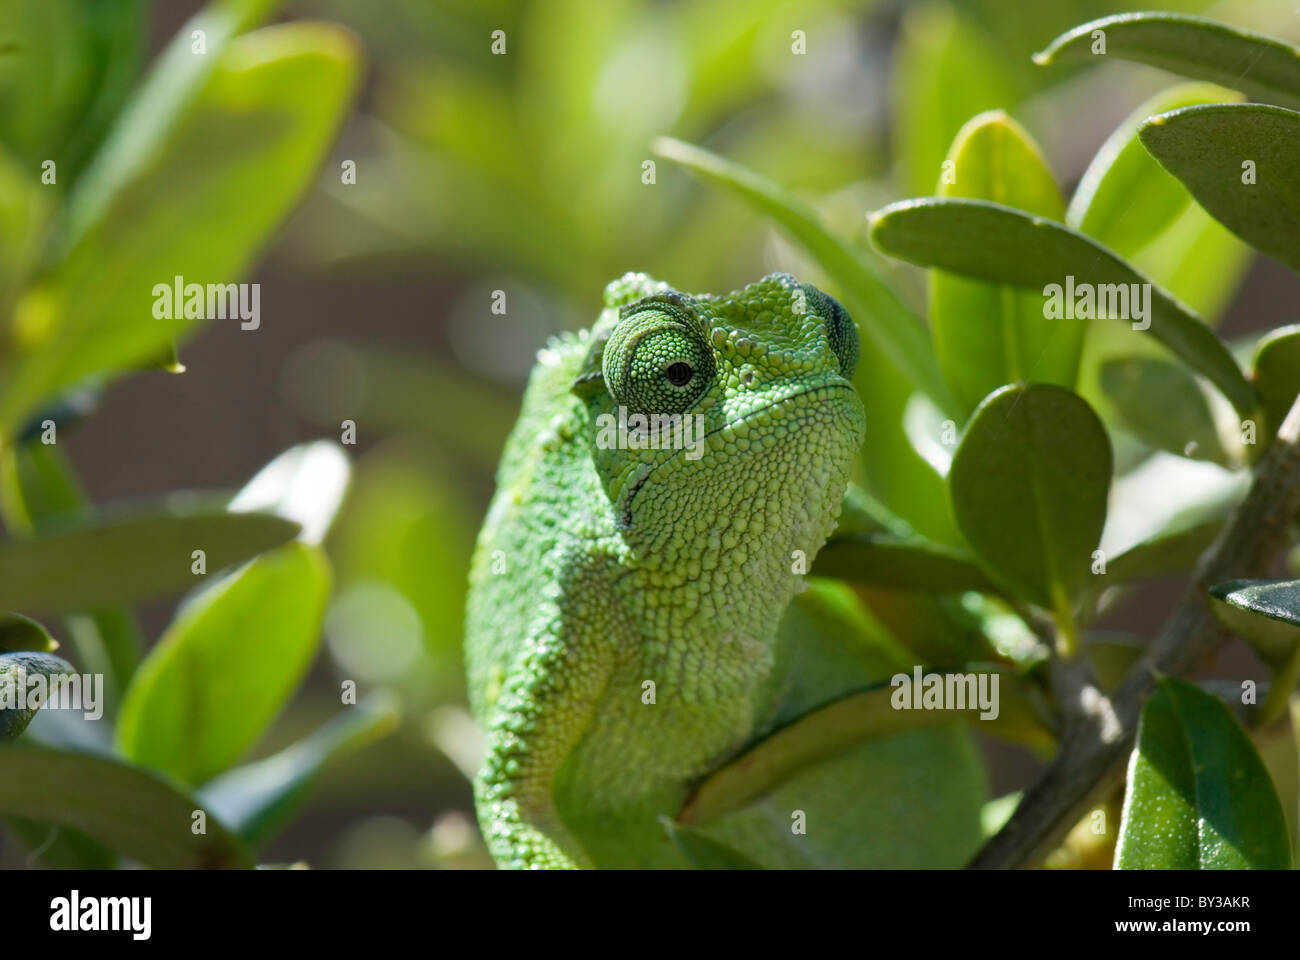 Green chameleon camouflaged among green foliage Stock Photo